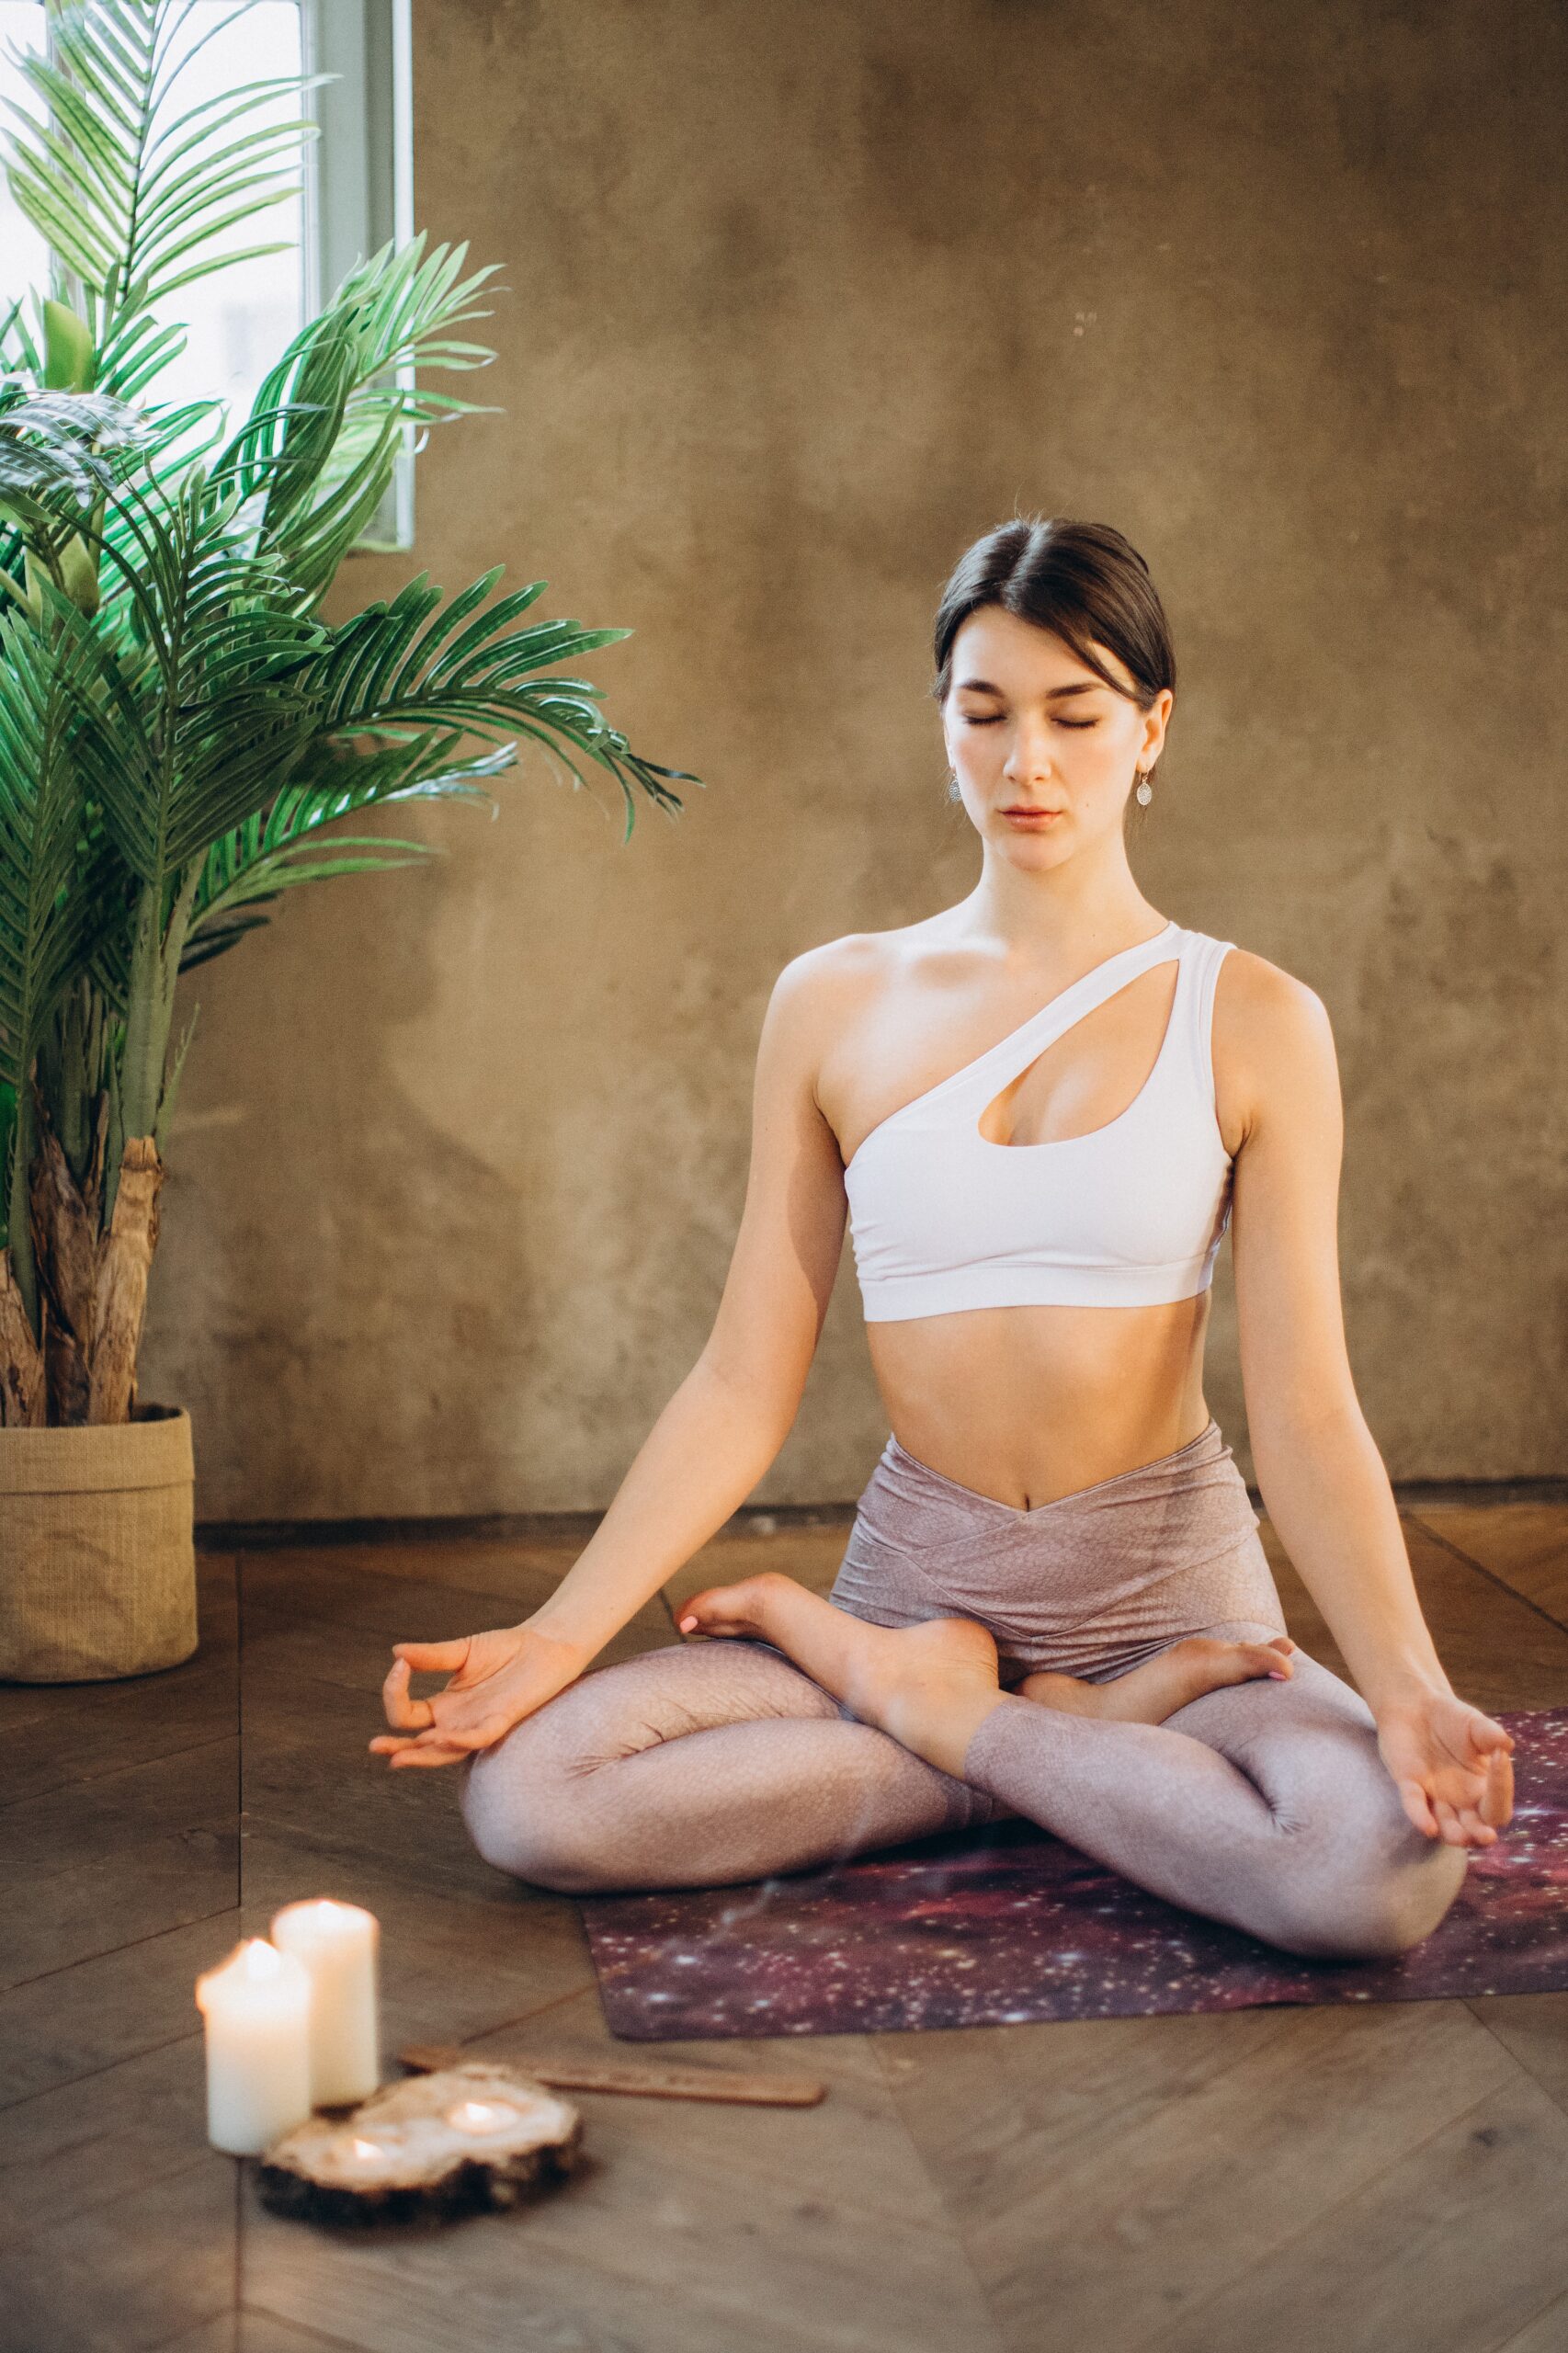 How to do the Lotus Pose (Padmasana) - Steps, Variations, Precautions